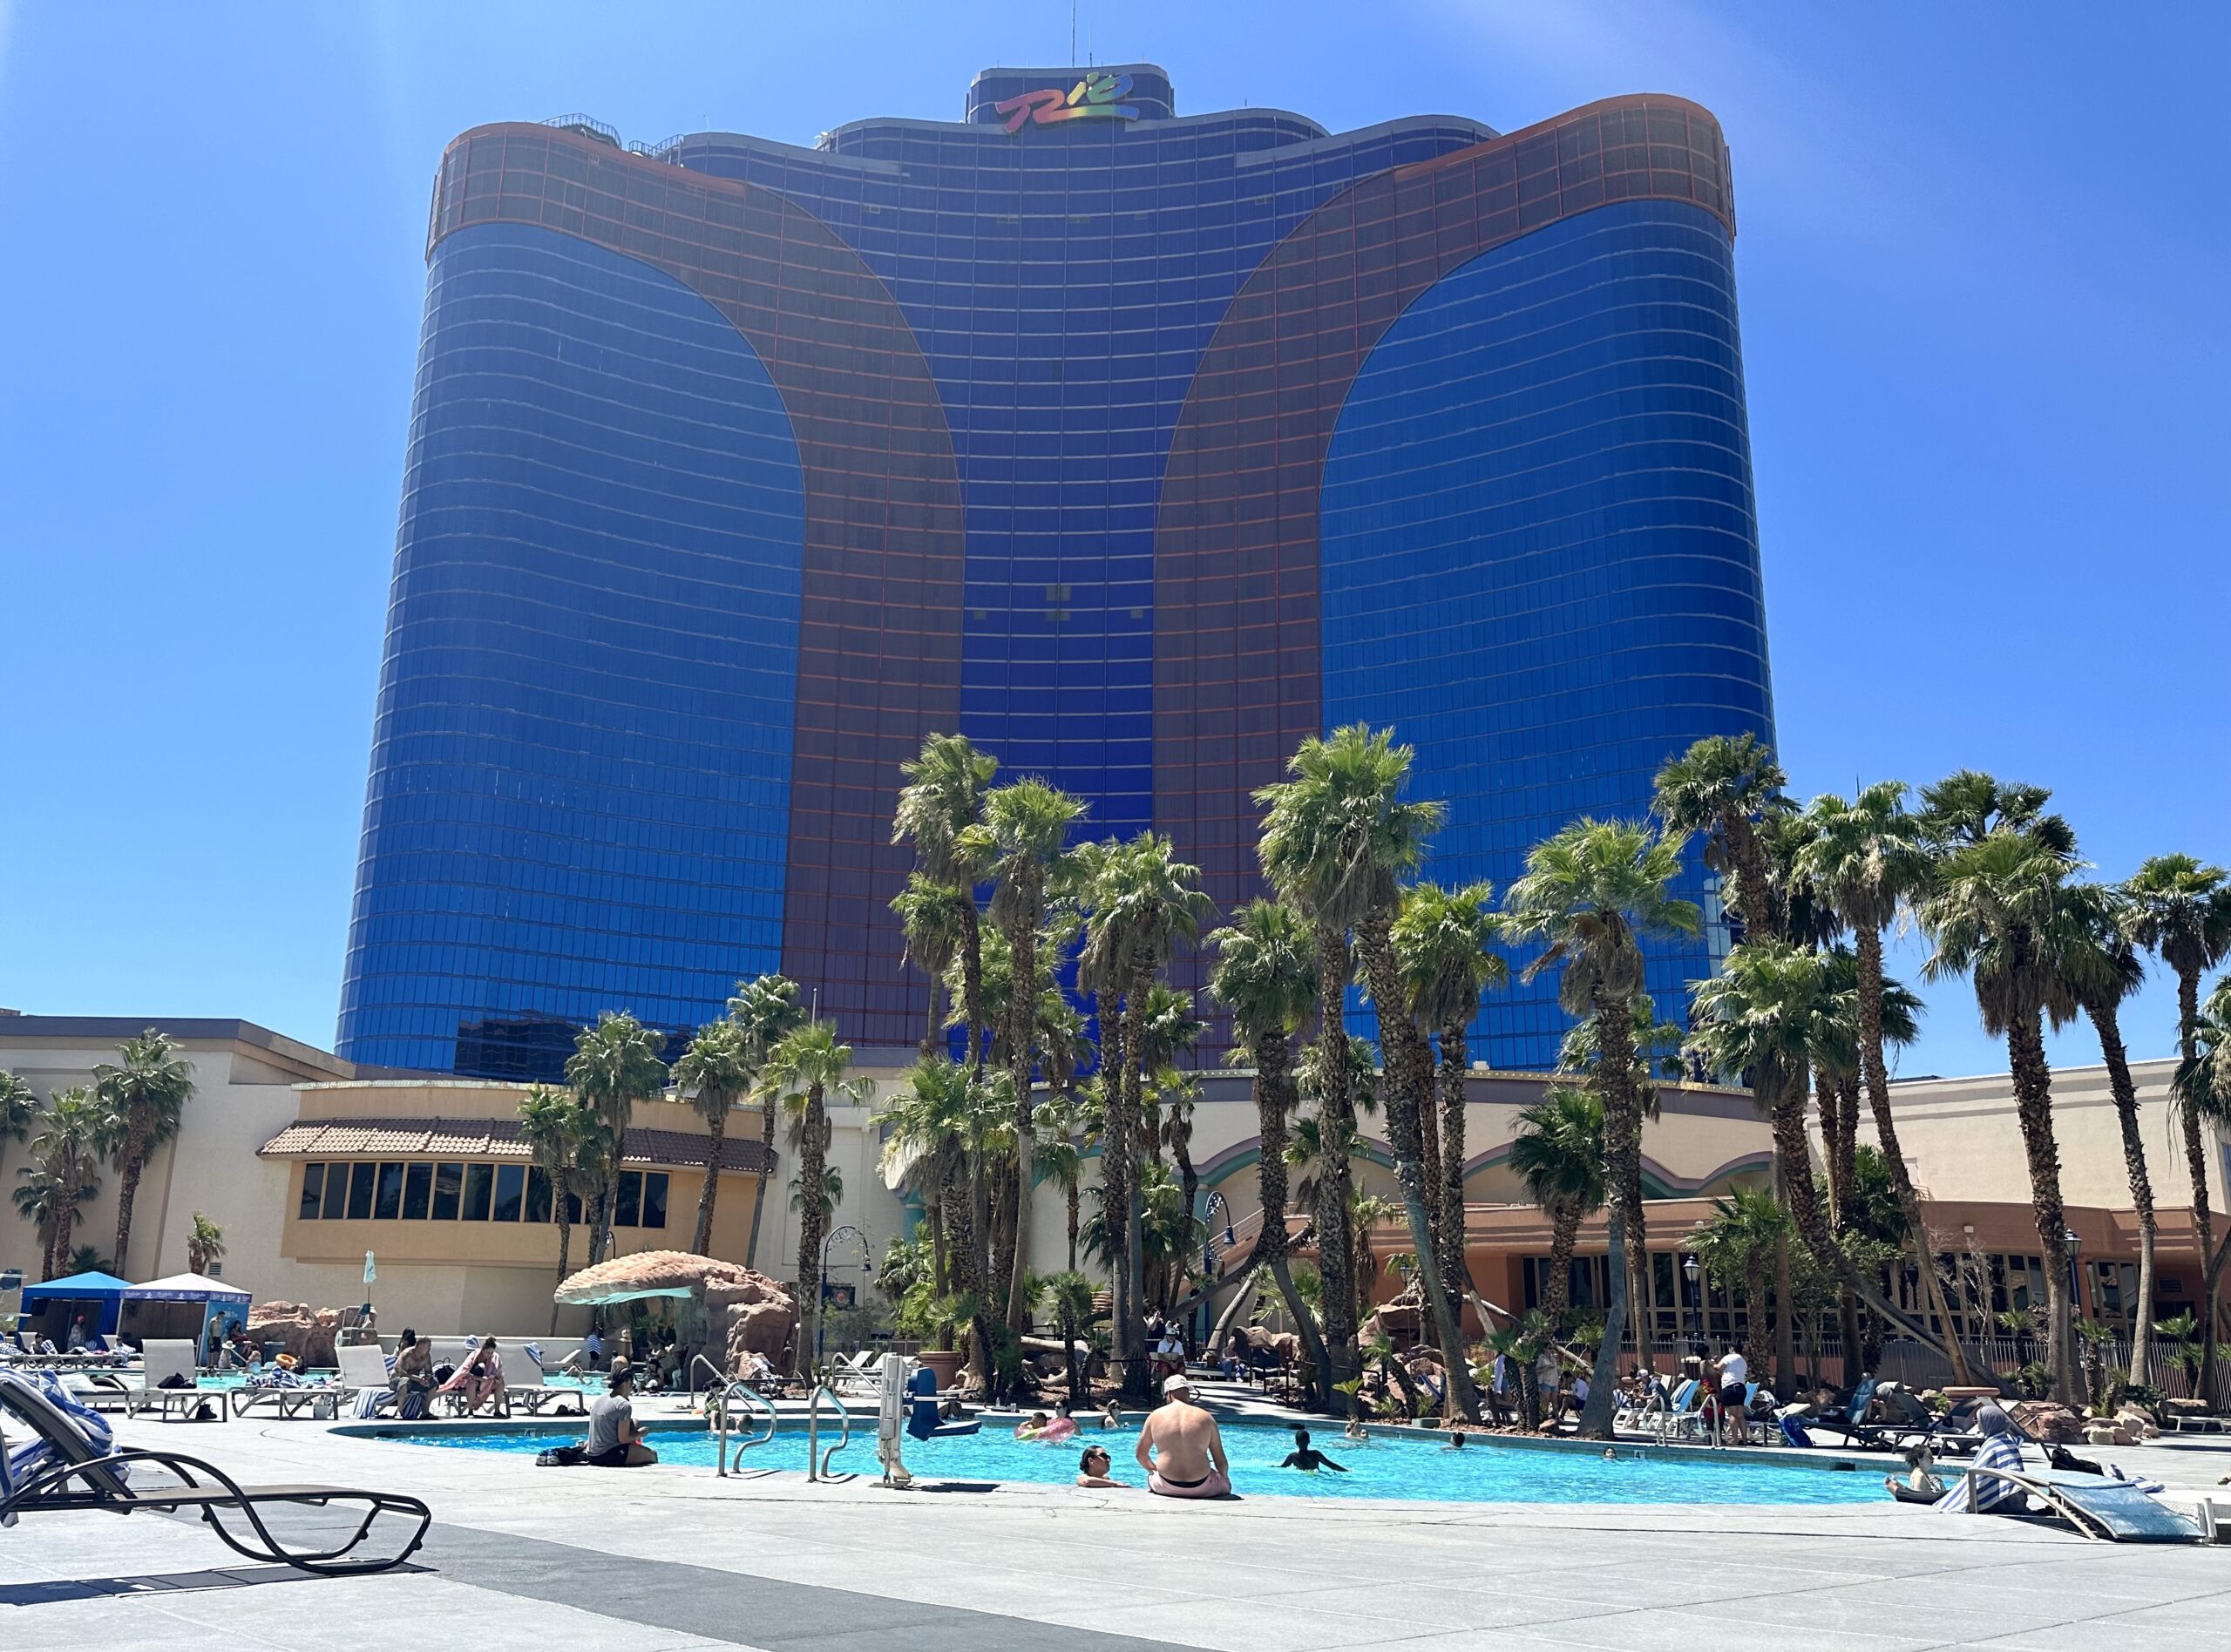 Rio Las Vegas Pools: Season, Hours, Access and More - Midlife Miles